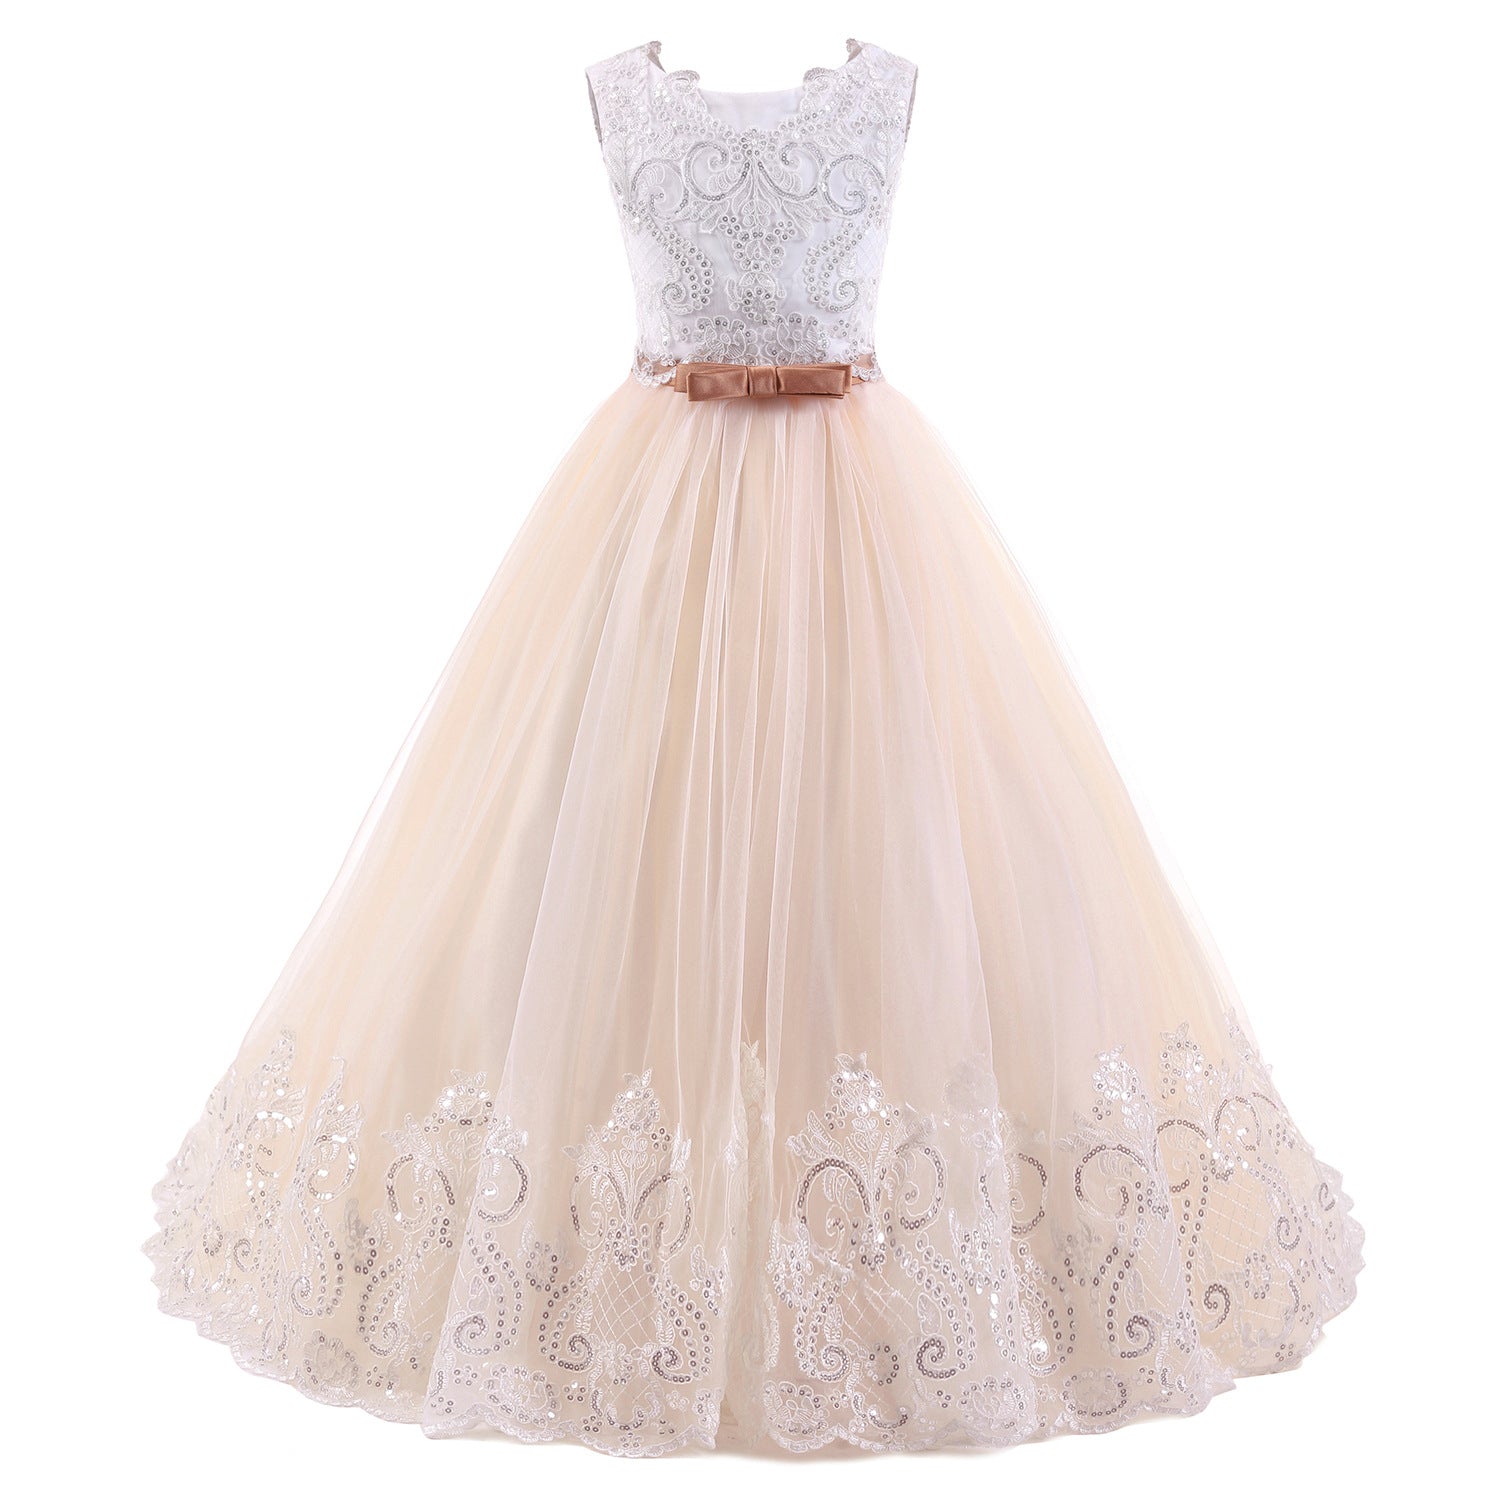 Communion Ball Gowns Secquin Dresses for Wedding Birthday Dresses Pageant Dresses Princess Dresses Flower Girl